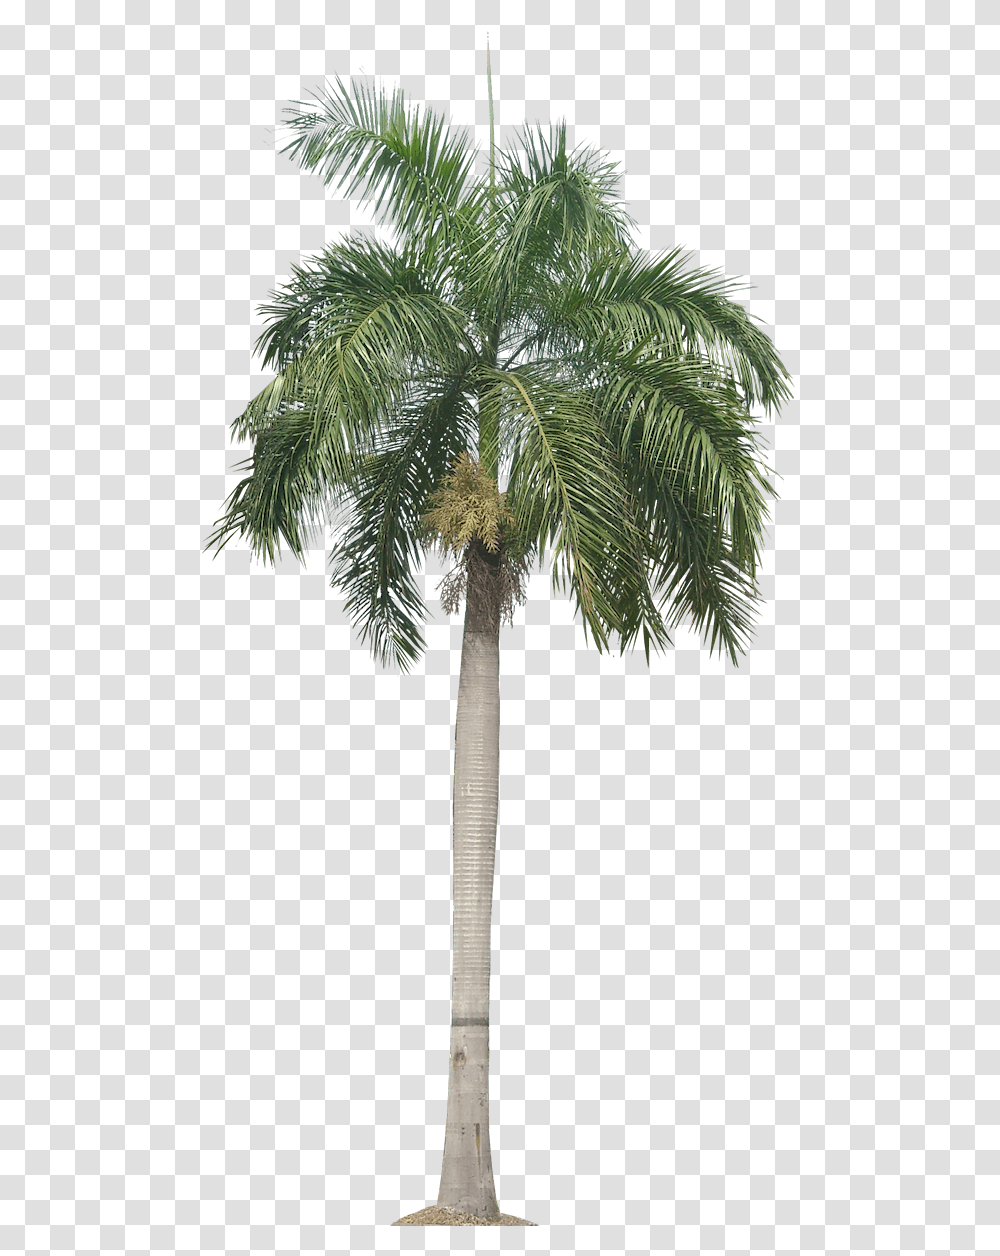 Palm Plant Tropical Plant Pictures Image Background Palm Tree, Arecaceae, Cross, Tree Trunk Transparent Png